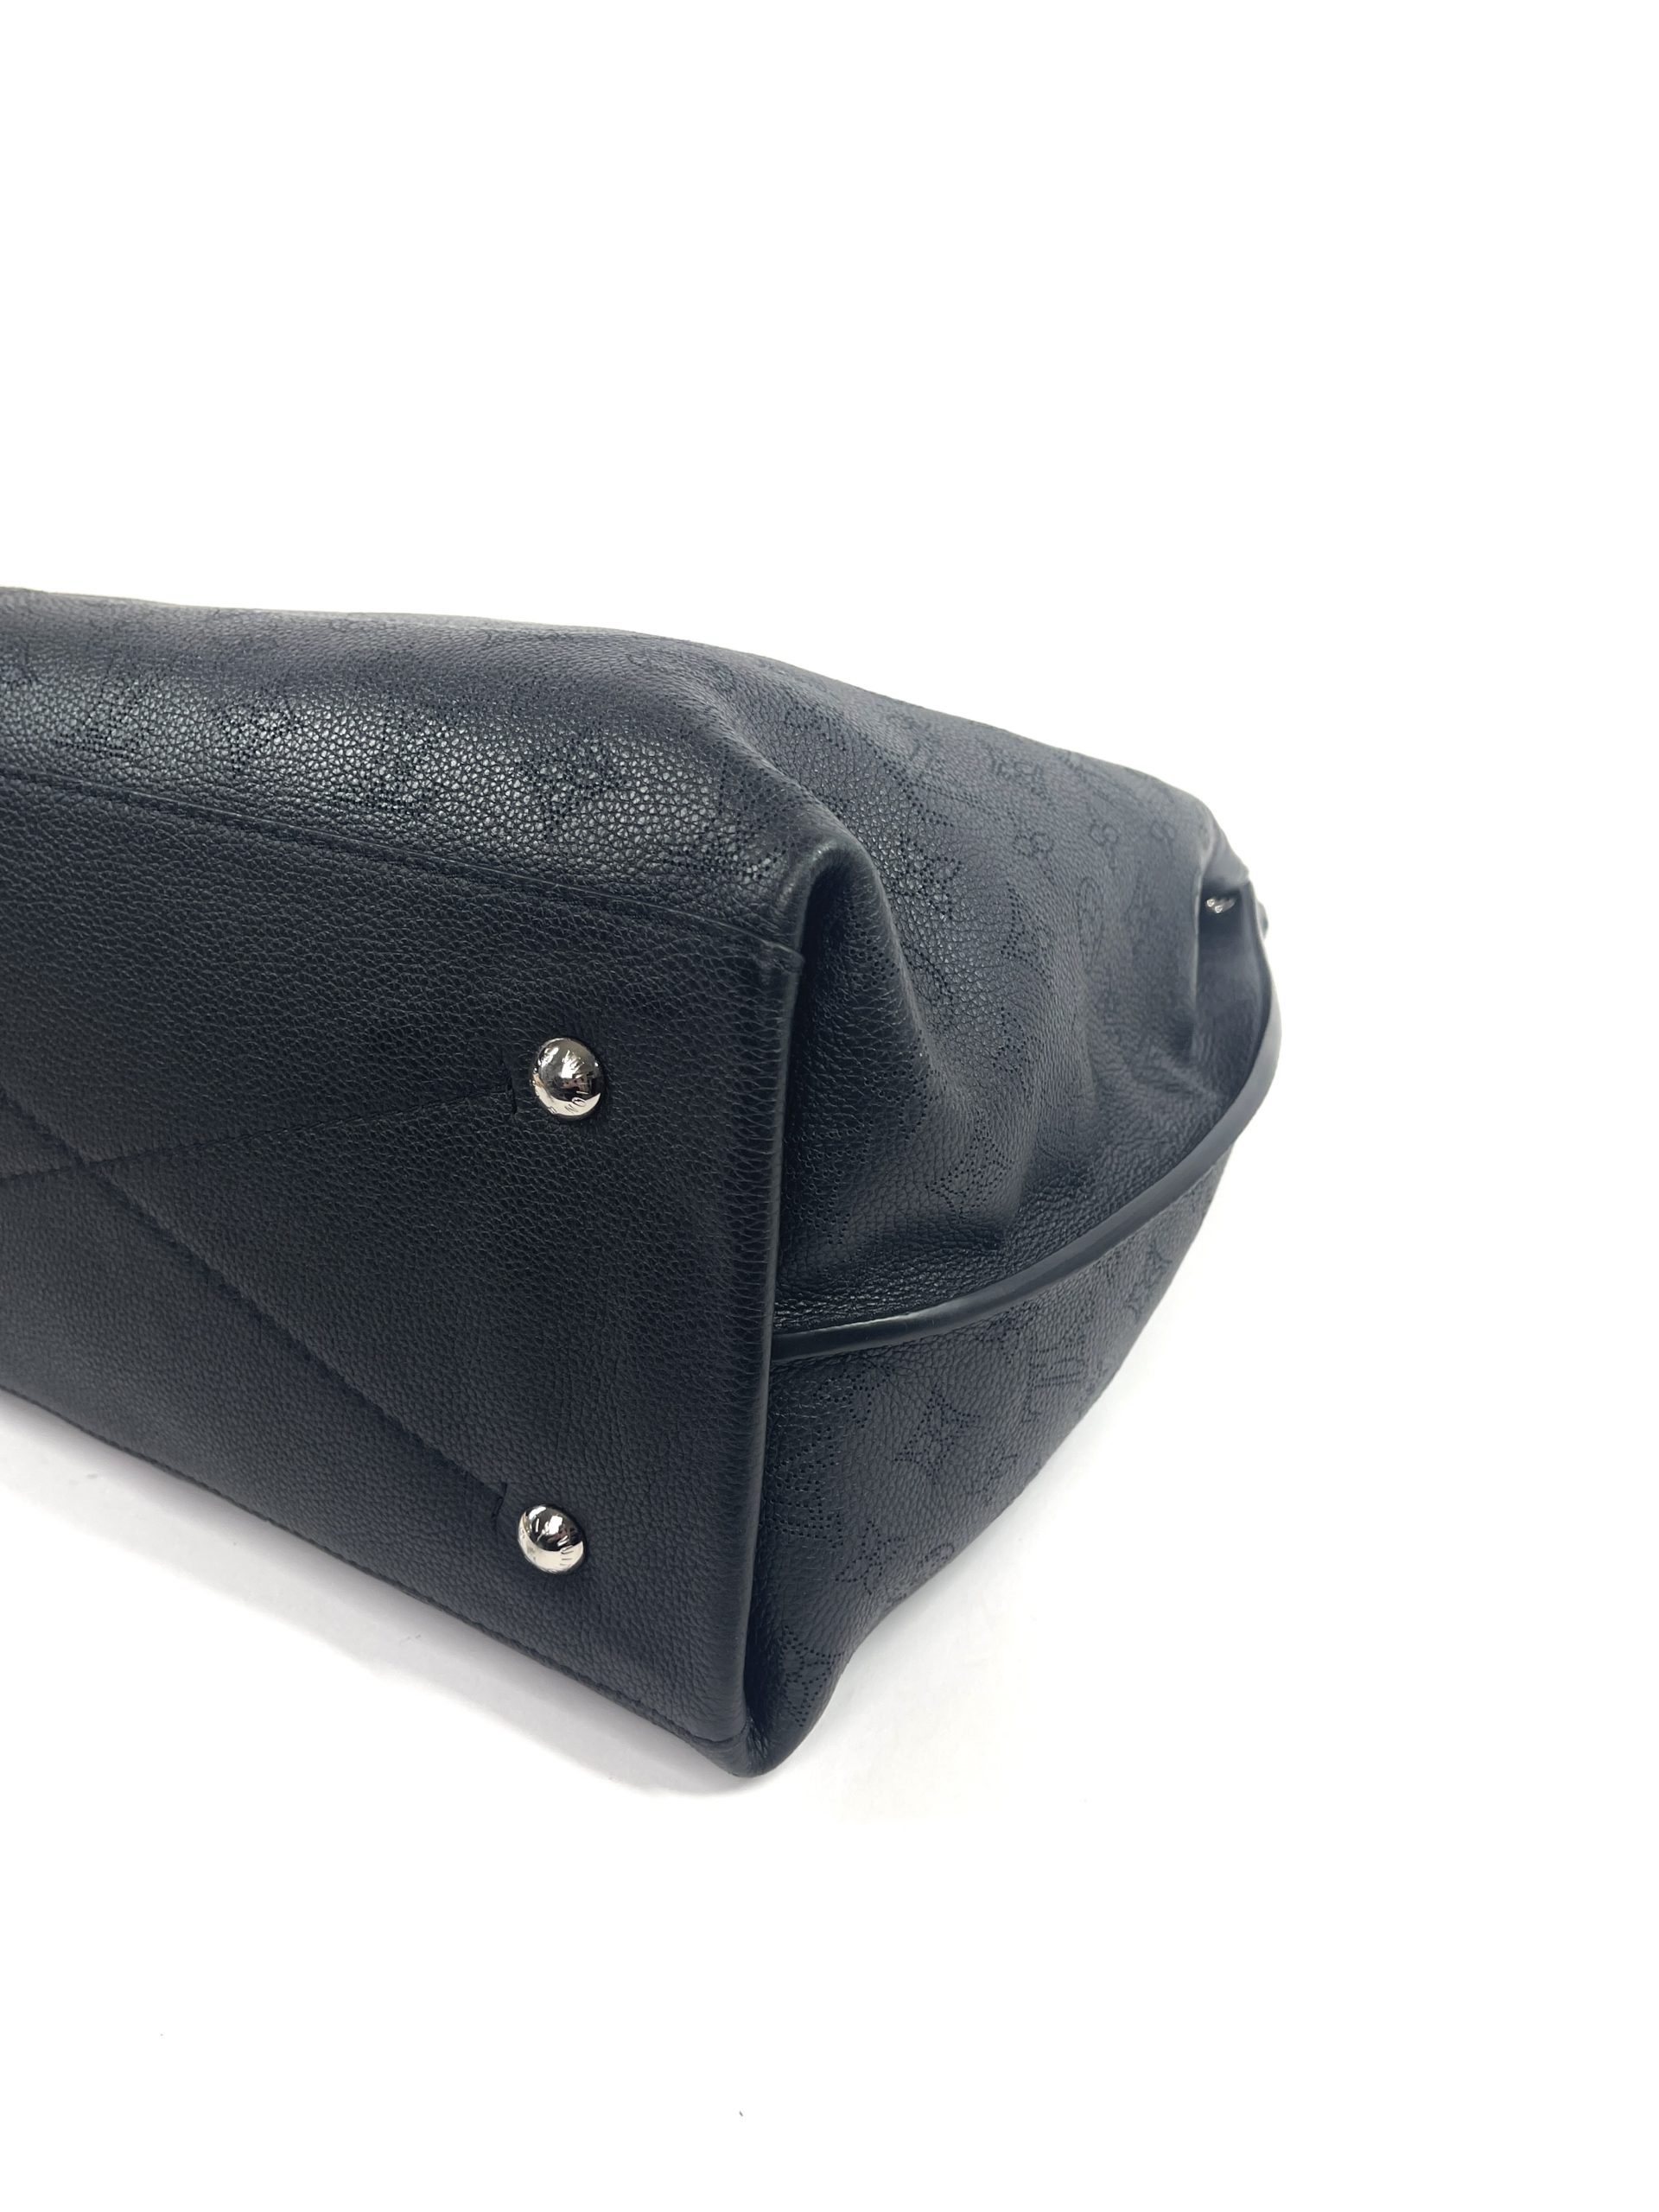 Carmel leather handbag Louis Vuitton Black in Leather - 21556430